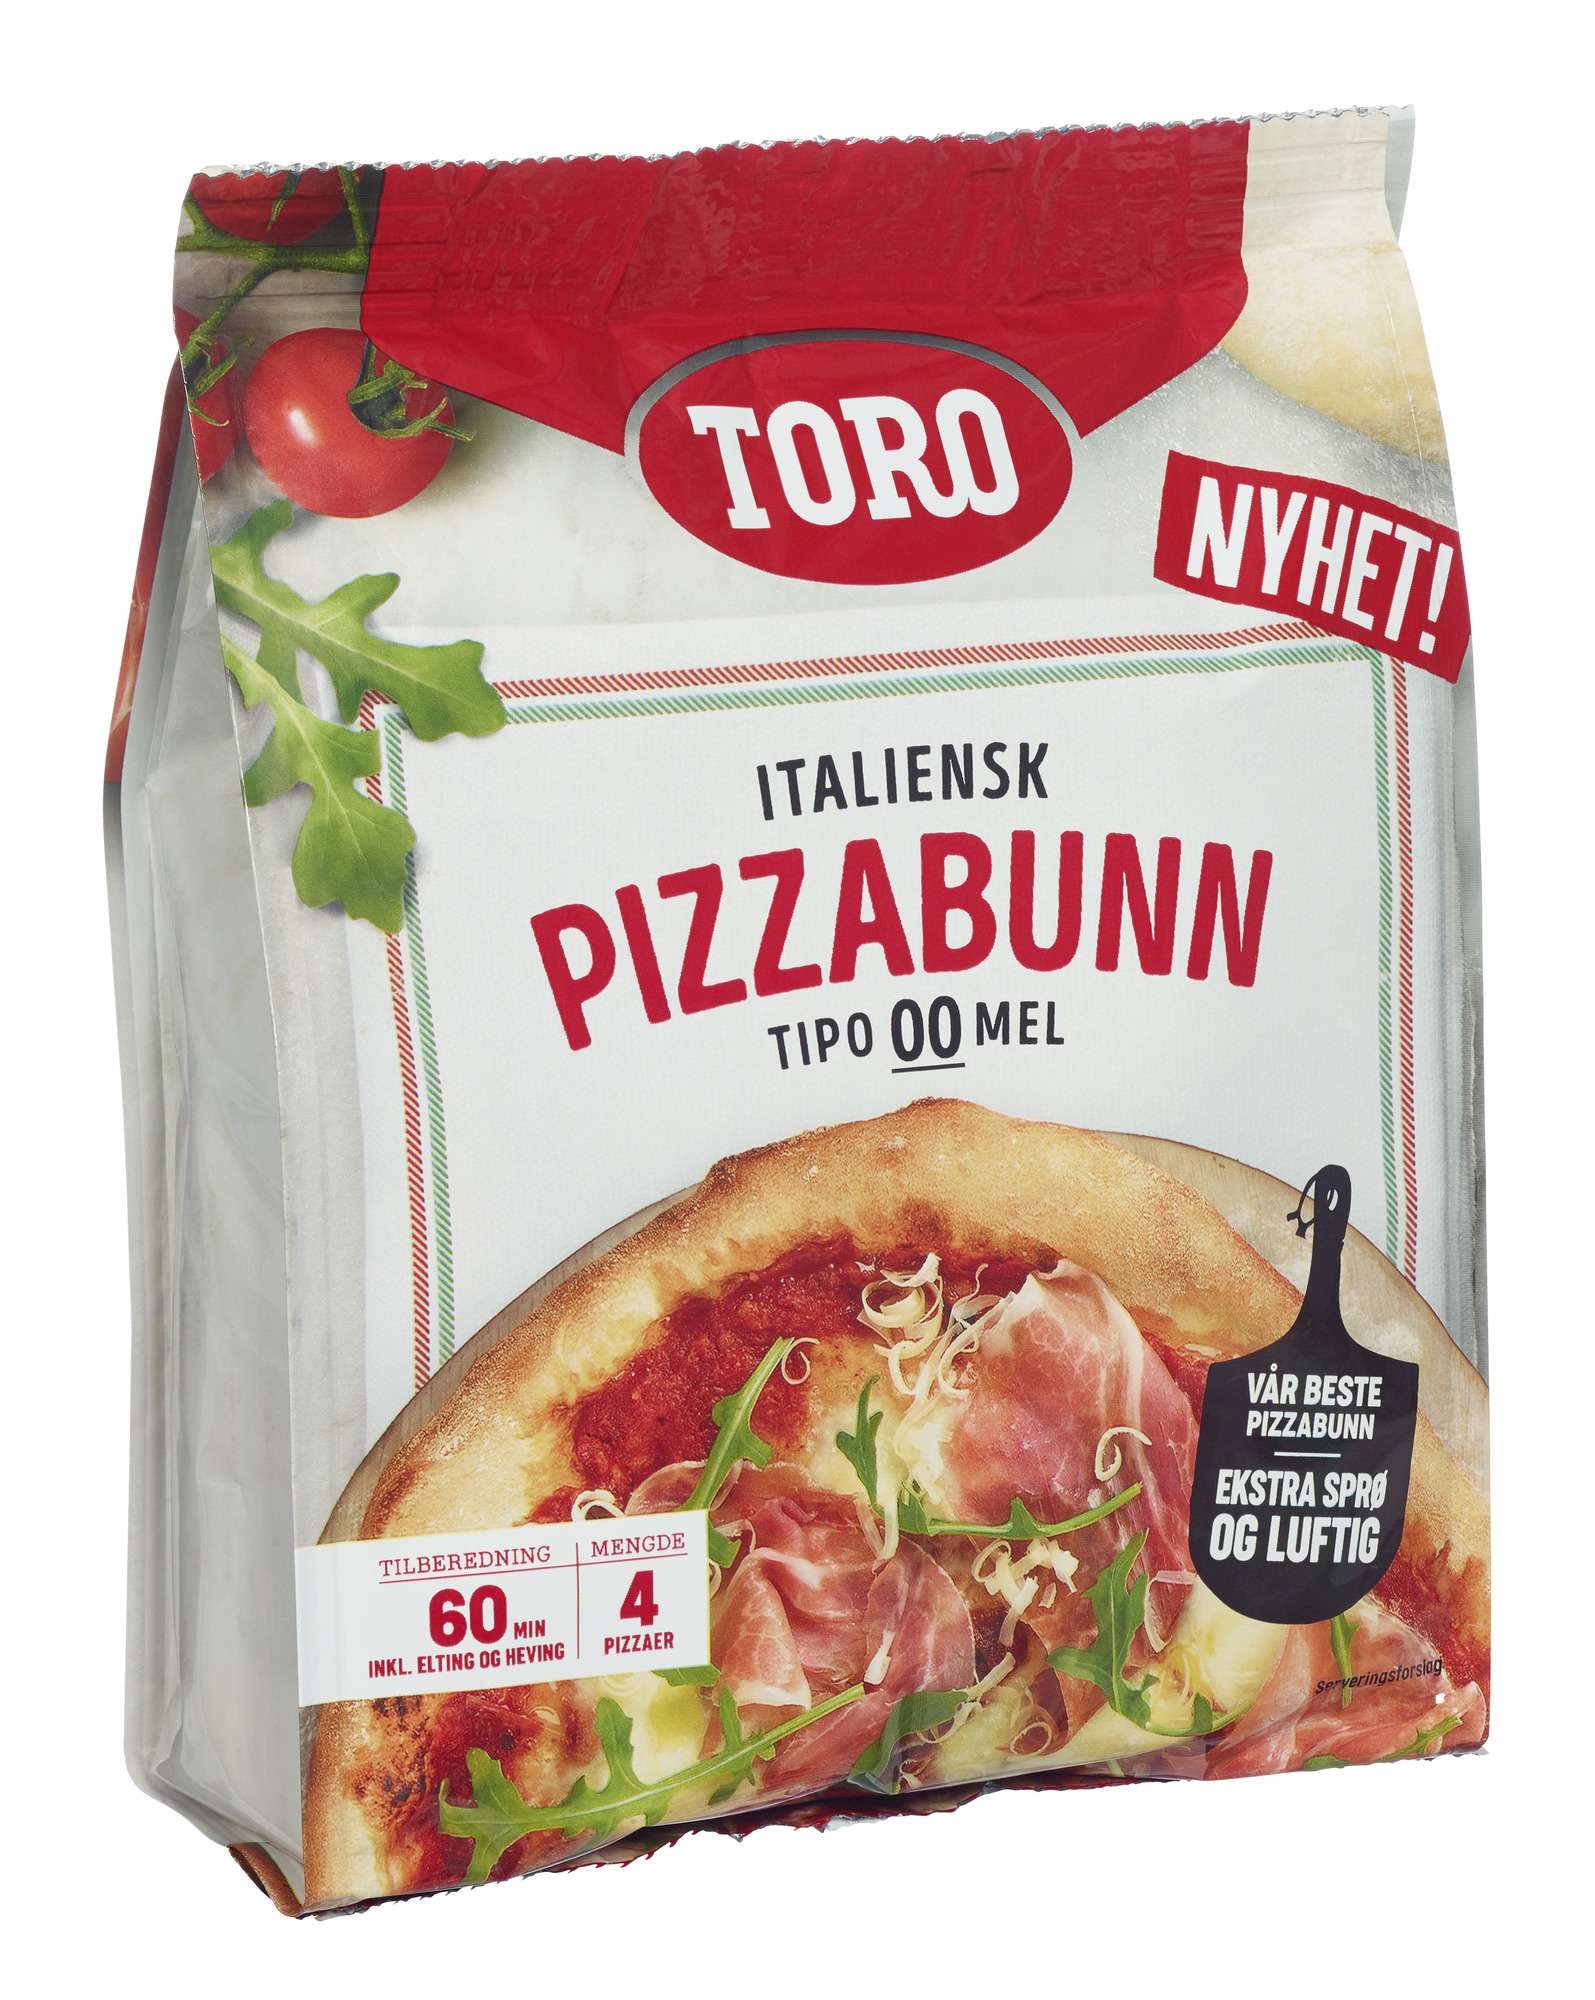 Toro pizzabunn italiensk  400g